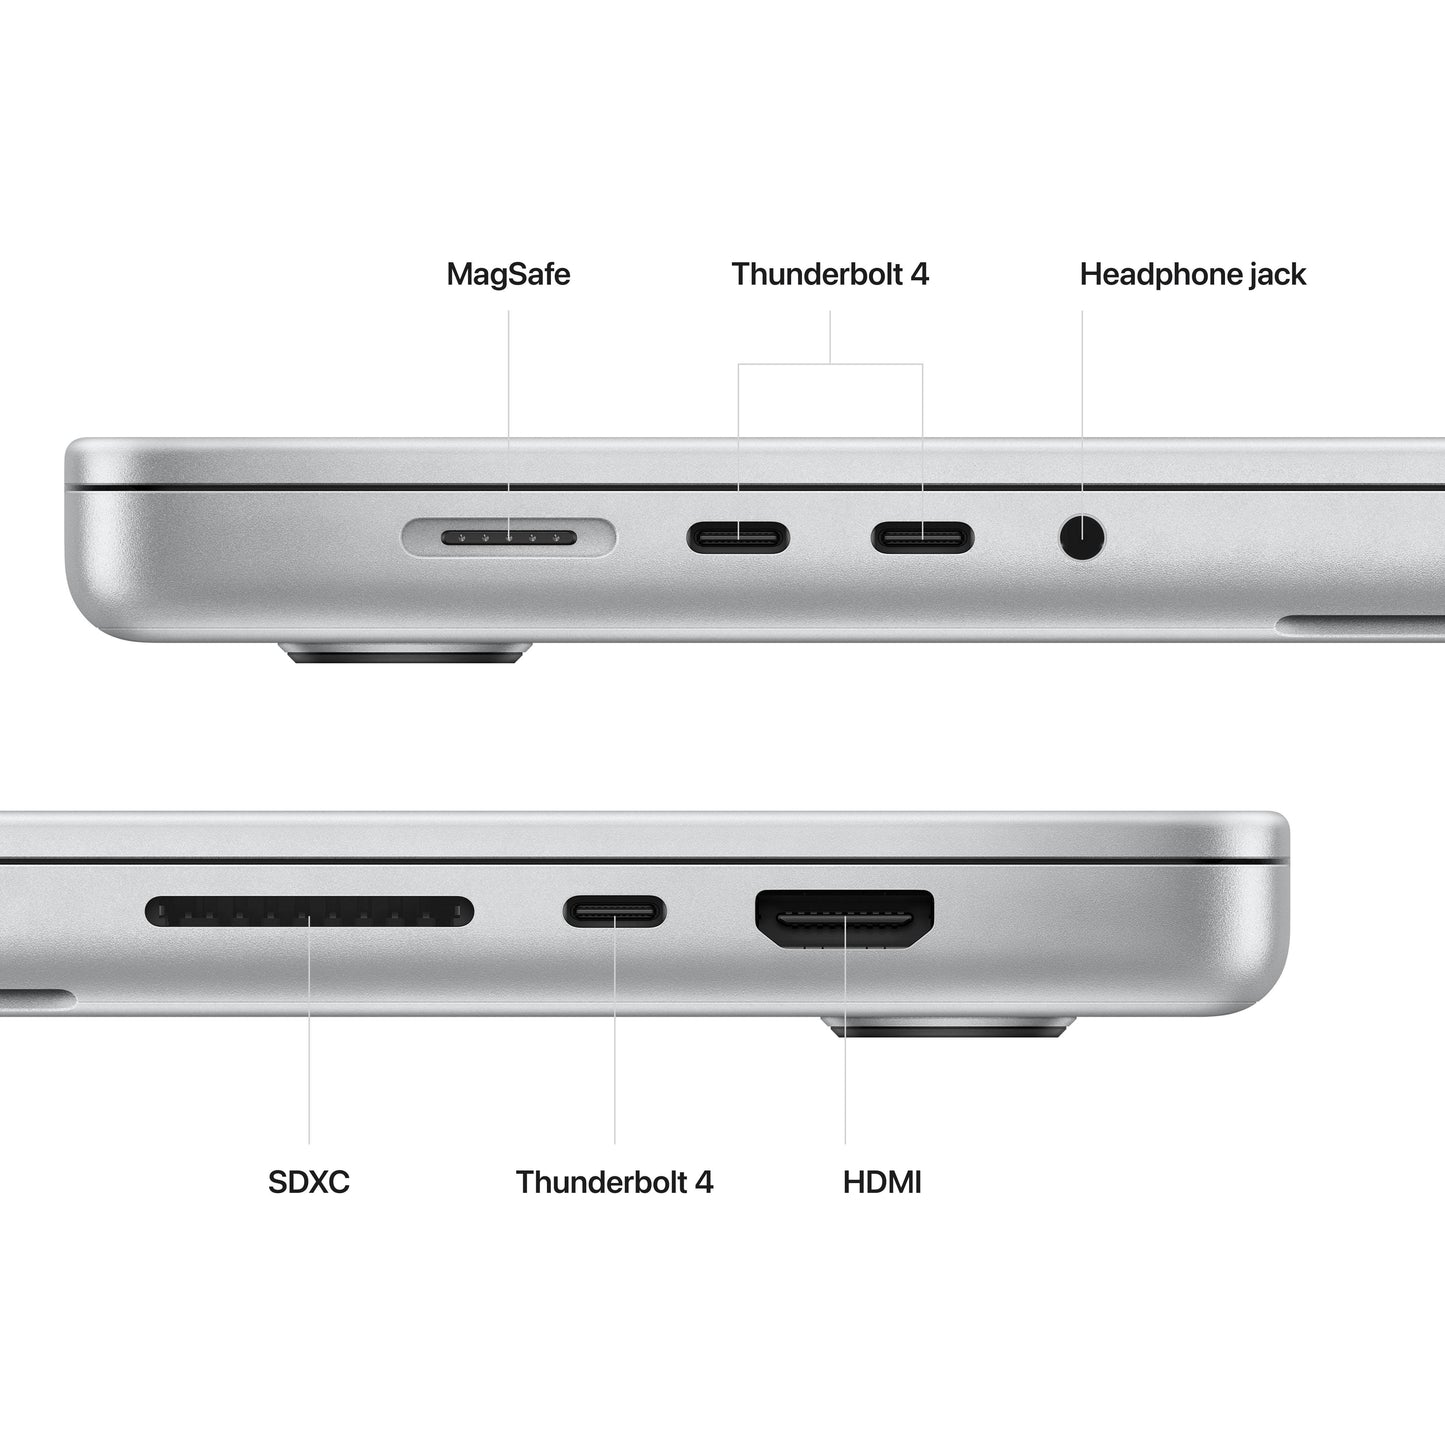 16-inch MacBook Pro: Apple M2 Pro chip with 12_core CPU and 19_core GPU, 1TB SSD - Silver